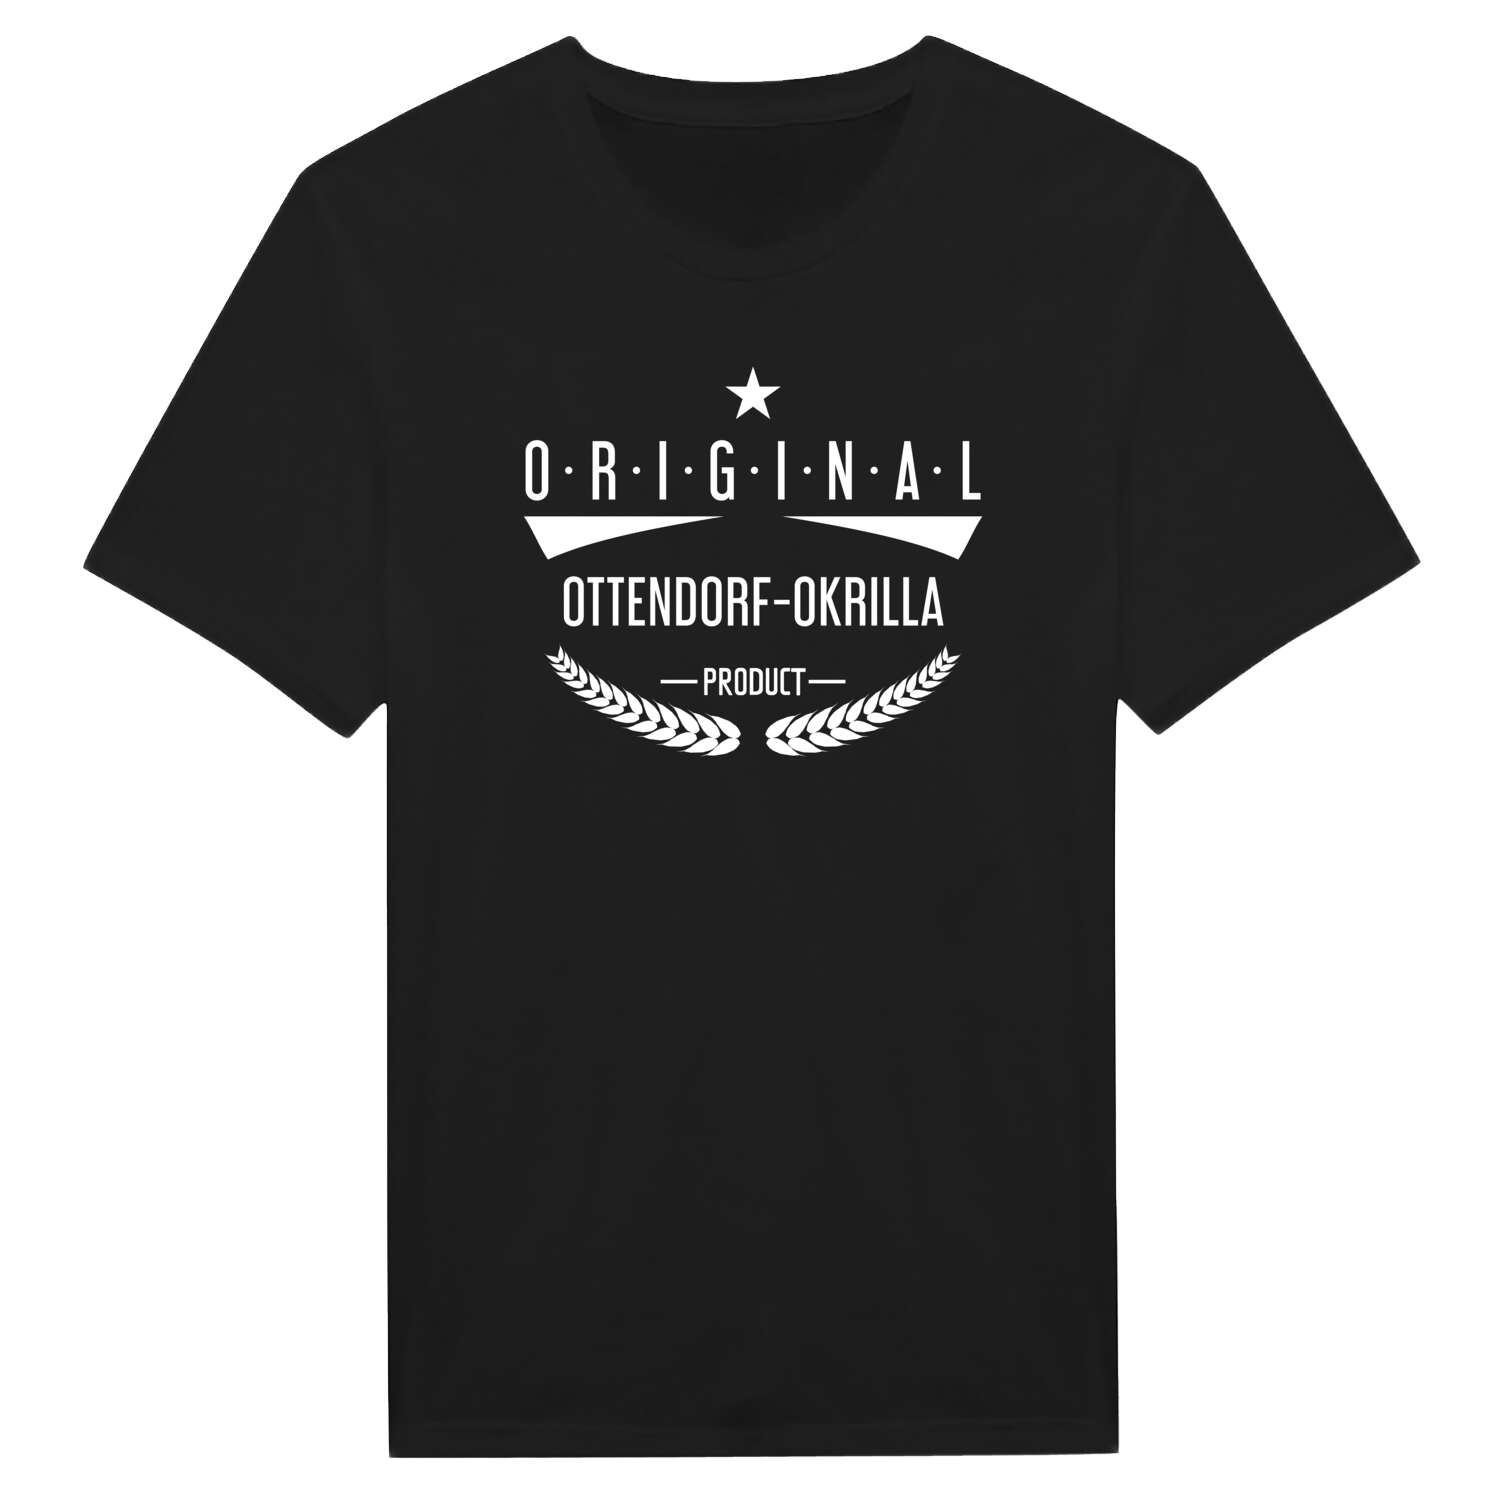 Ottendorf-Okrilla T-Shirt »Original Product«